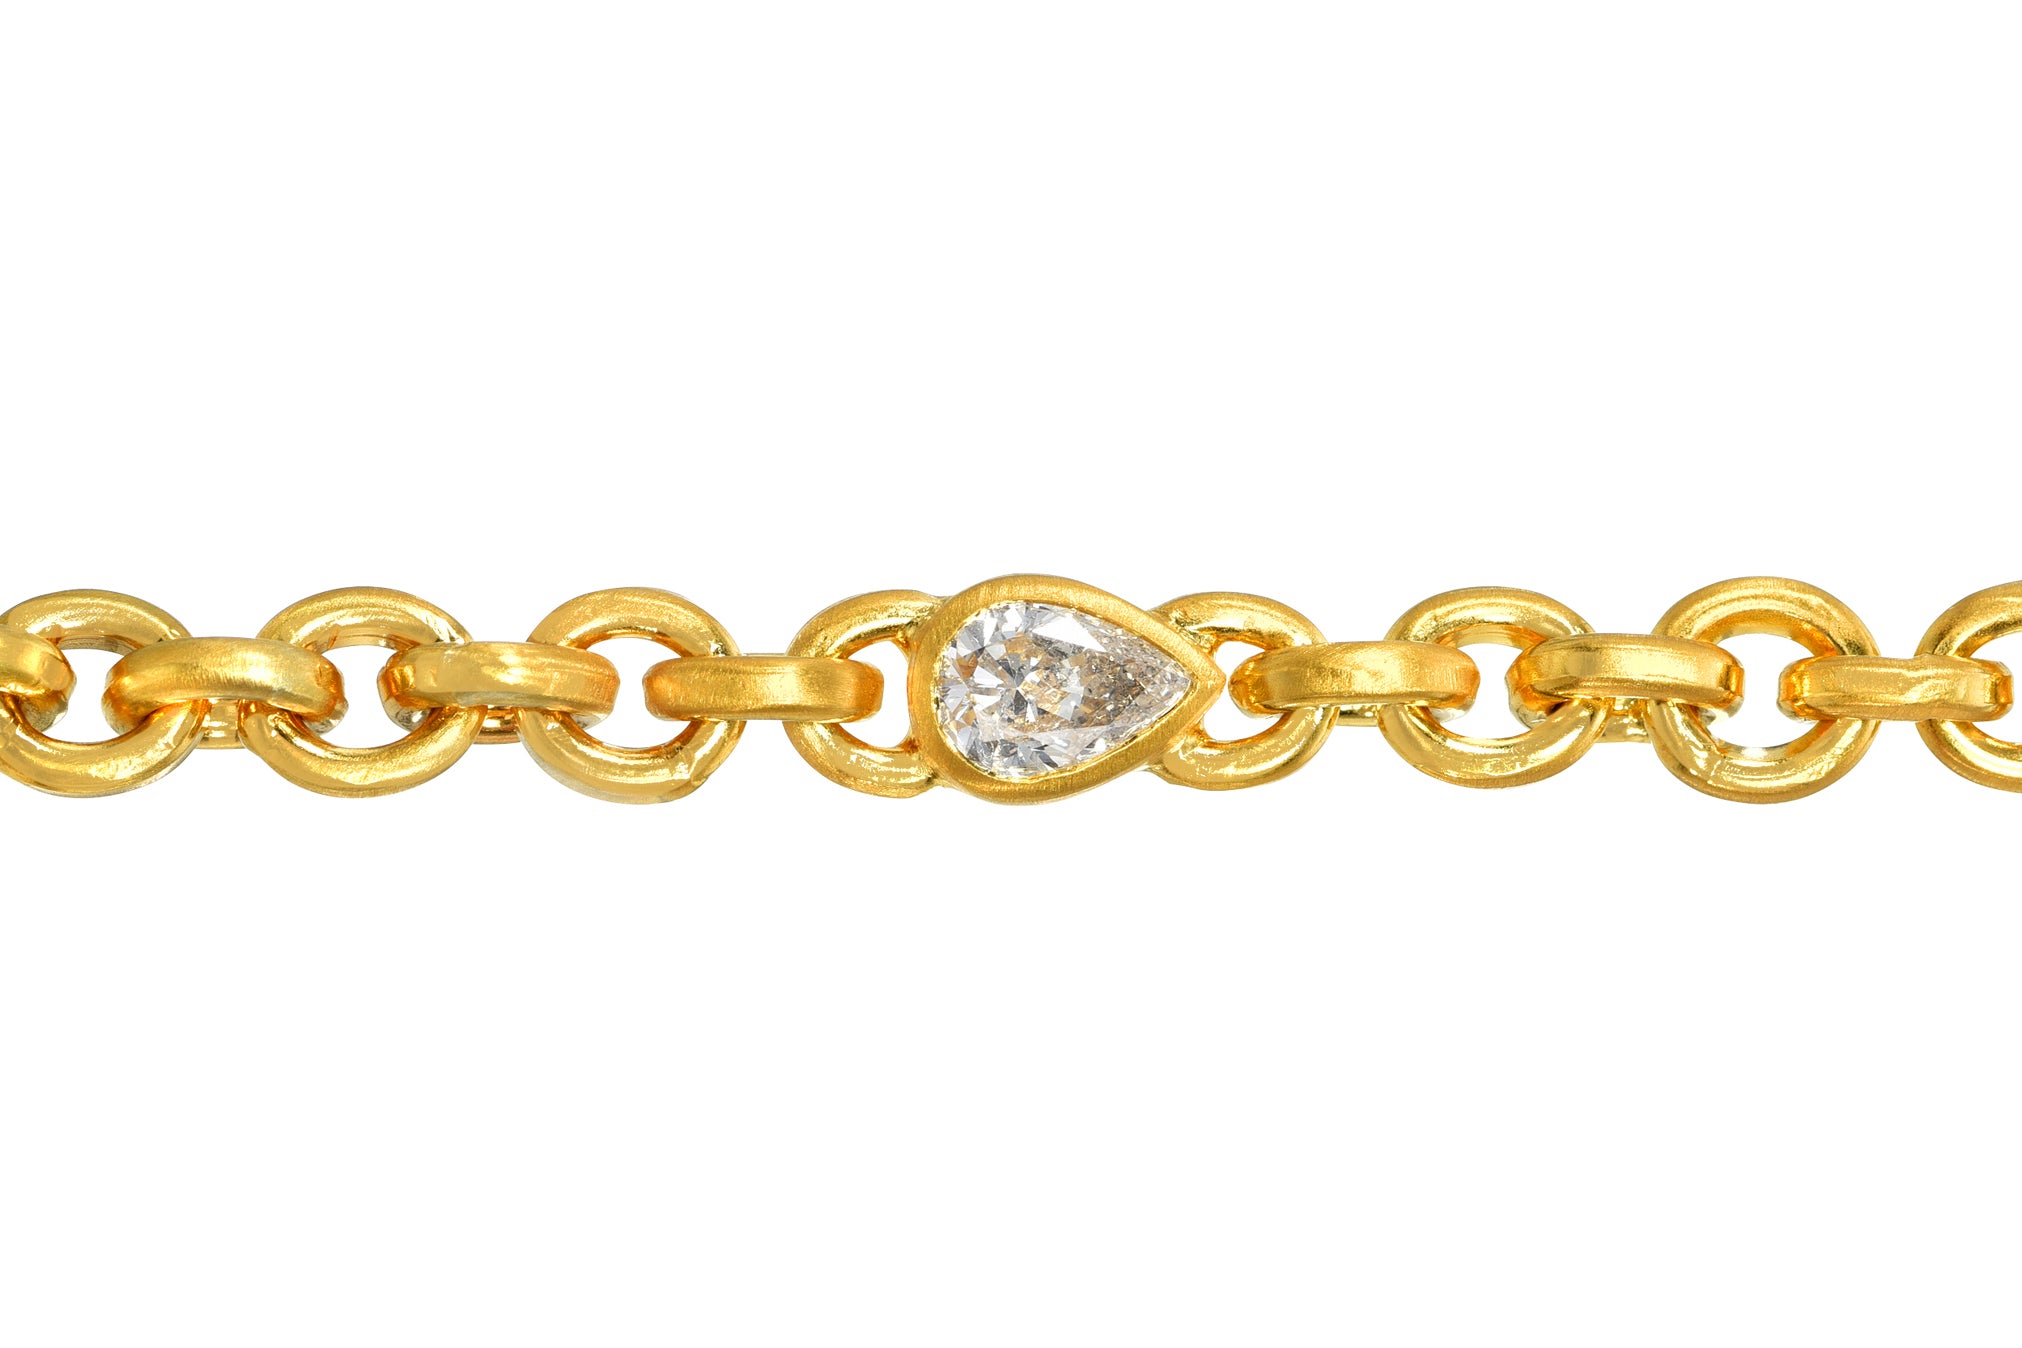 Darius Jewels one of a kind pear diamond oversized signature chain 